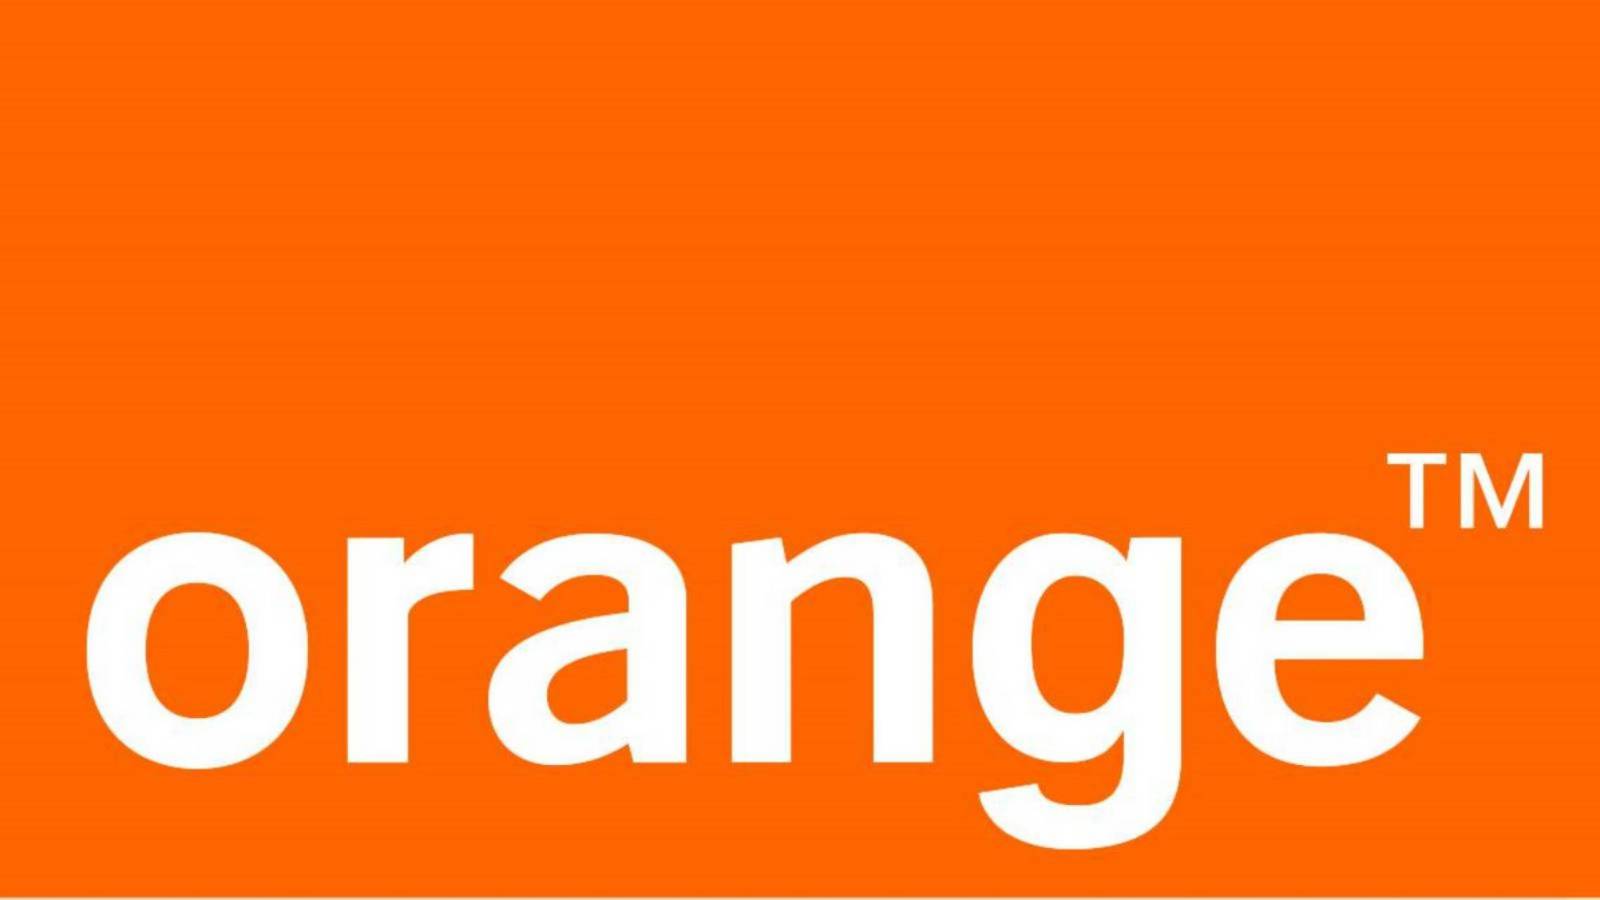 Orange Mesajul pentru Clienti BANI Returneaza Cum Obtin